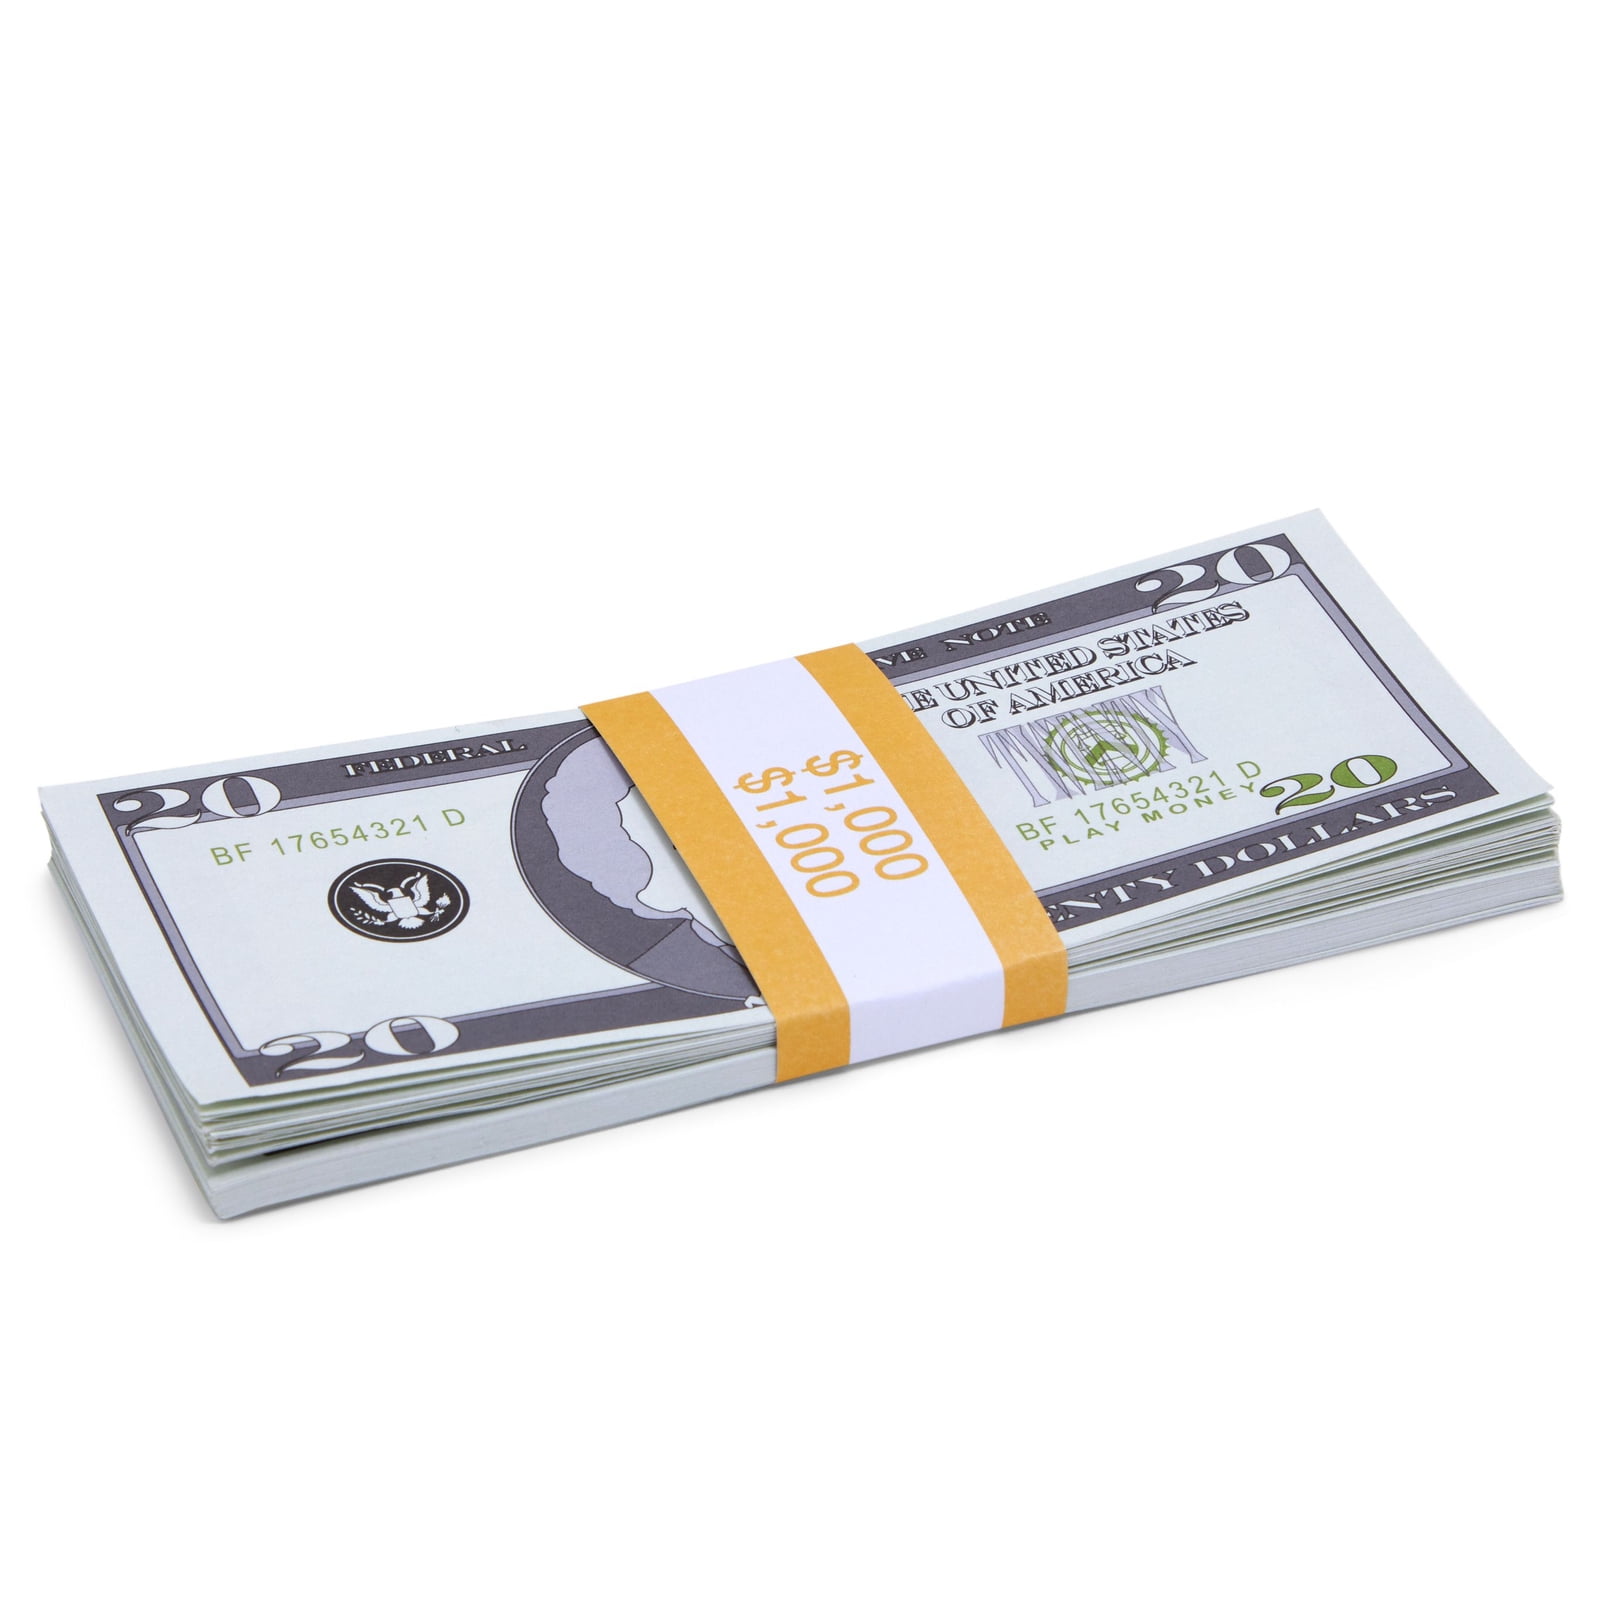 75 bills 3 stacks Dollhouse Miniature Replica Paper Money $100 Bills 